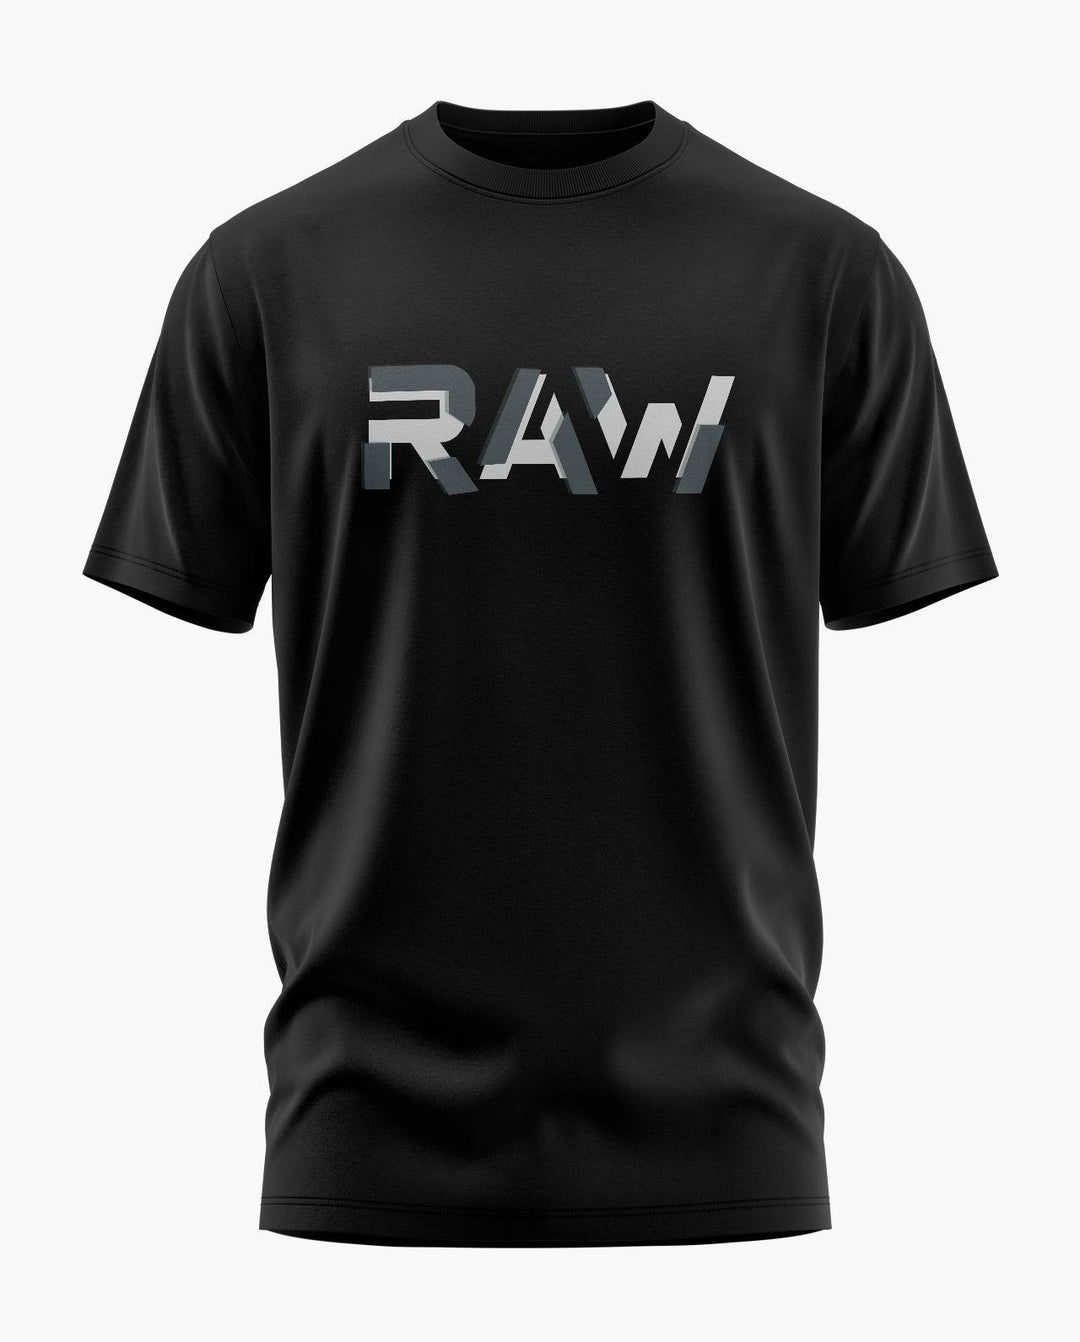 Raw T-Shirt - Aero Armour